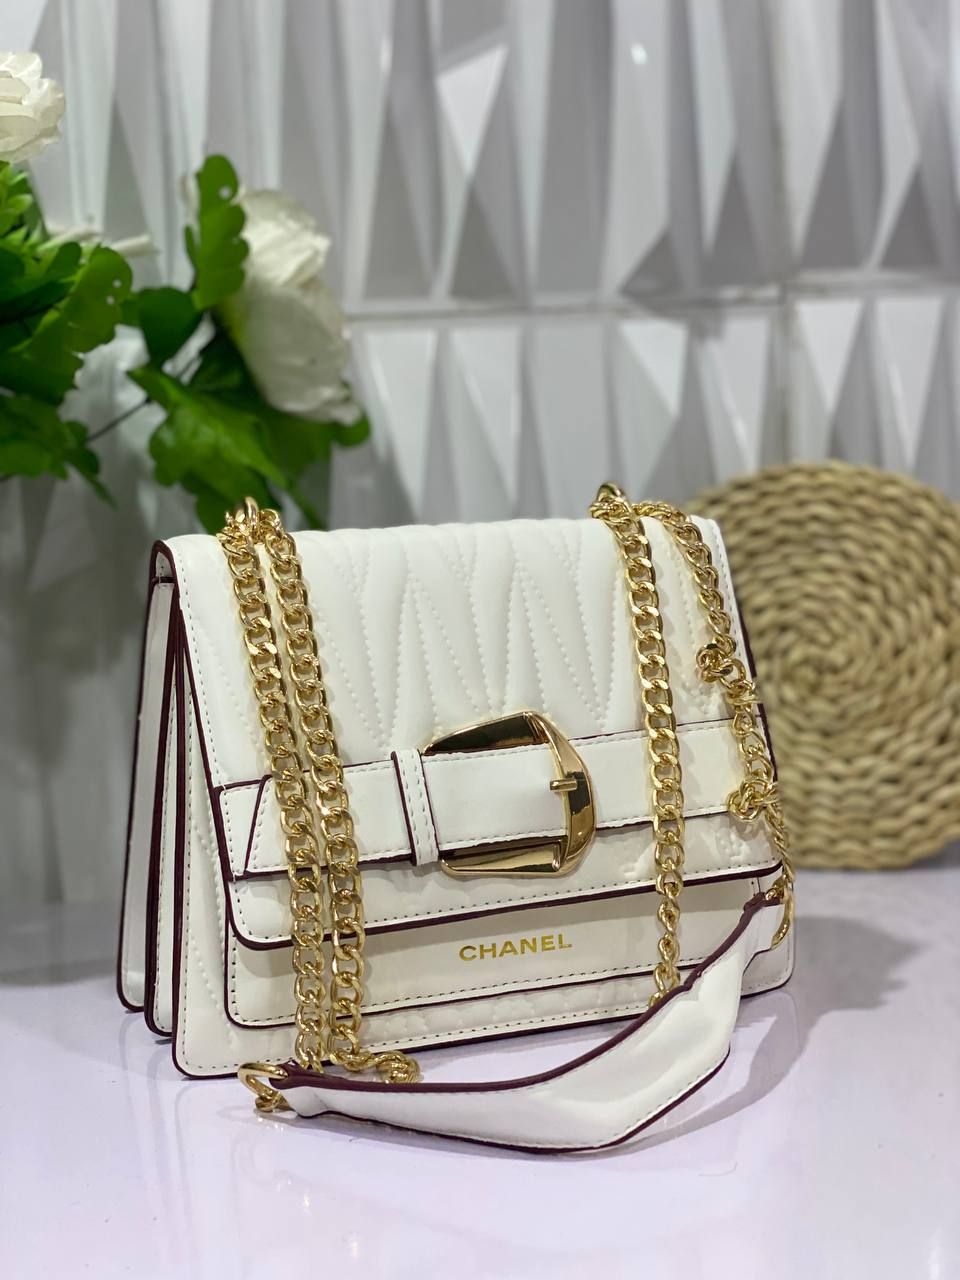 Beautiful Chanel bag